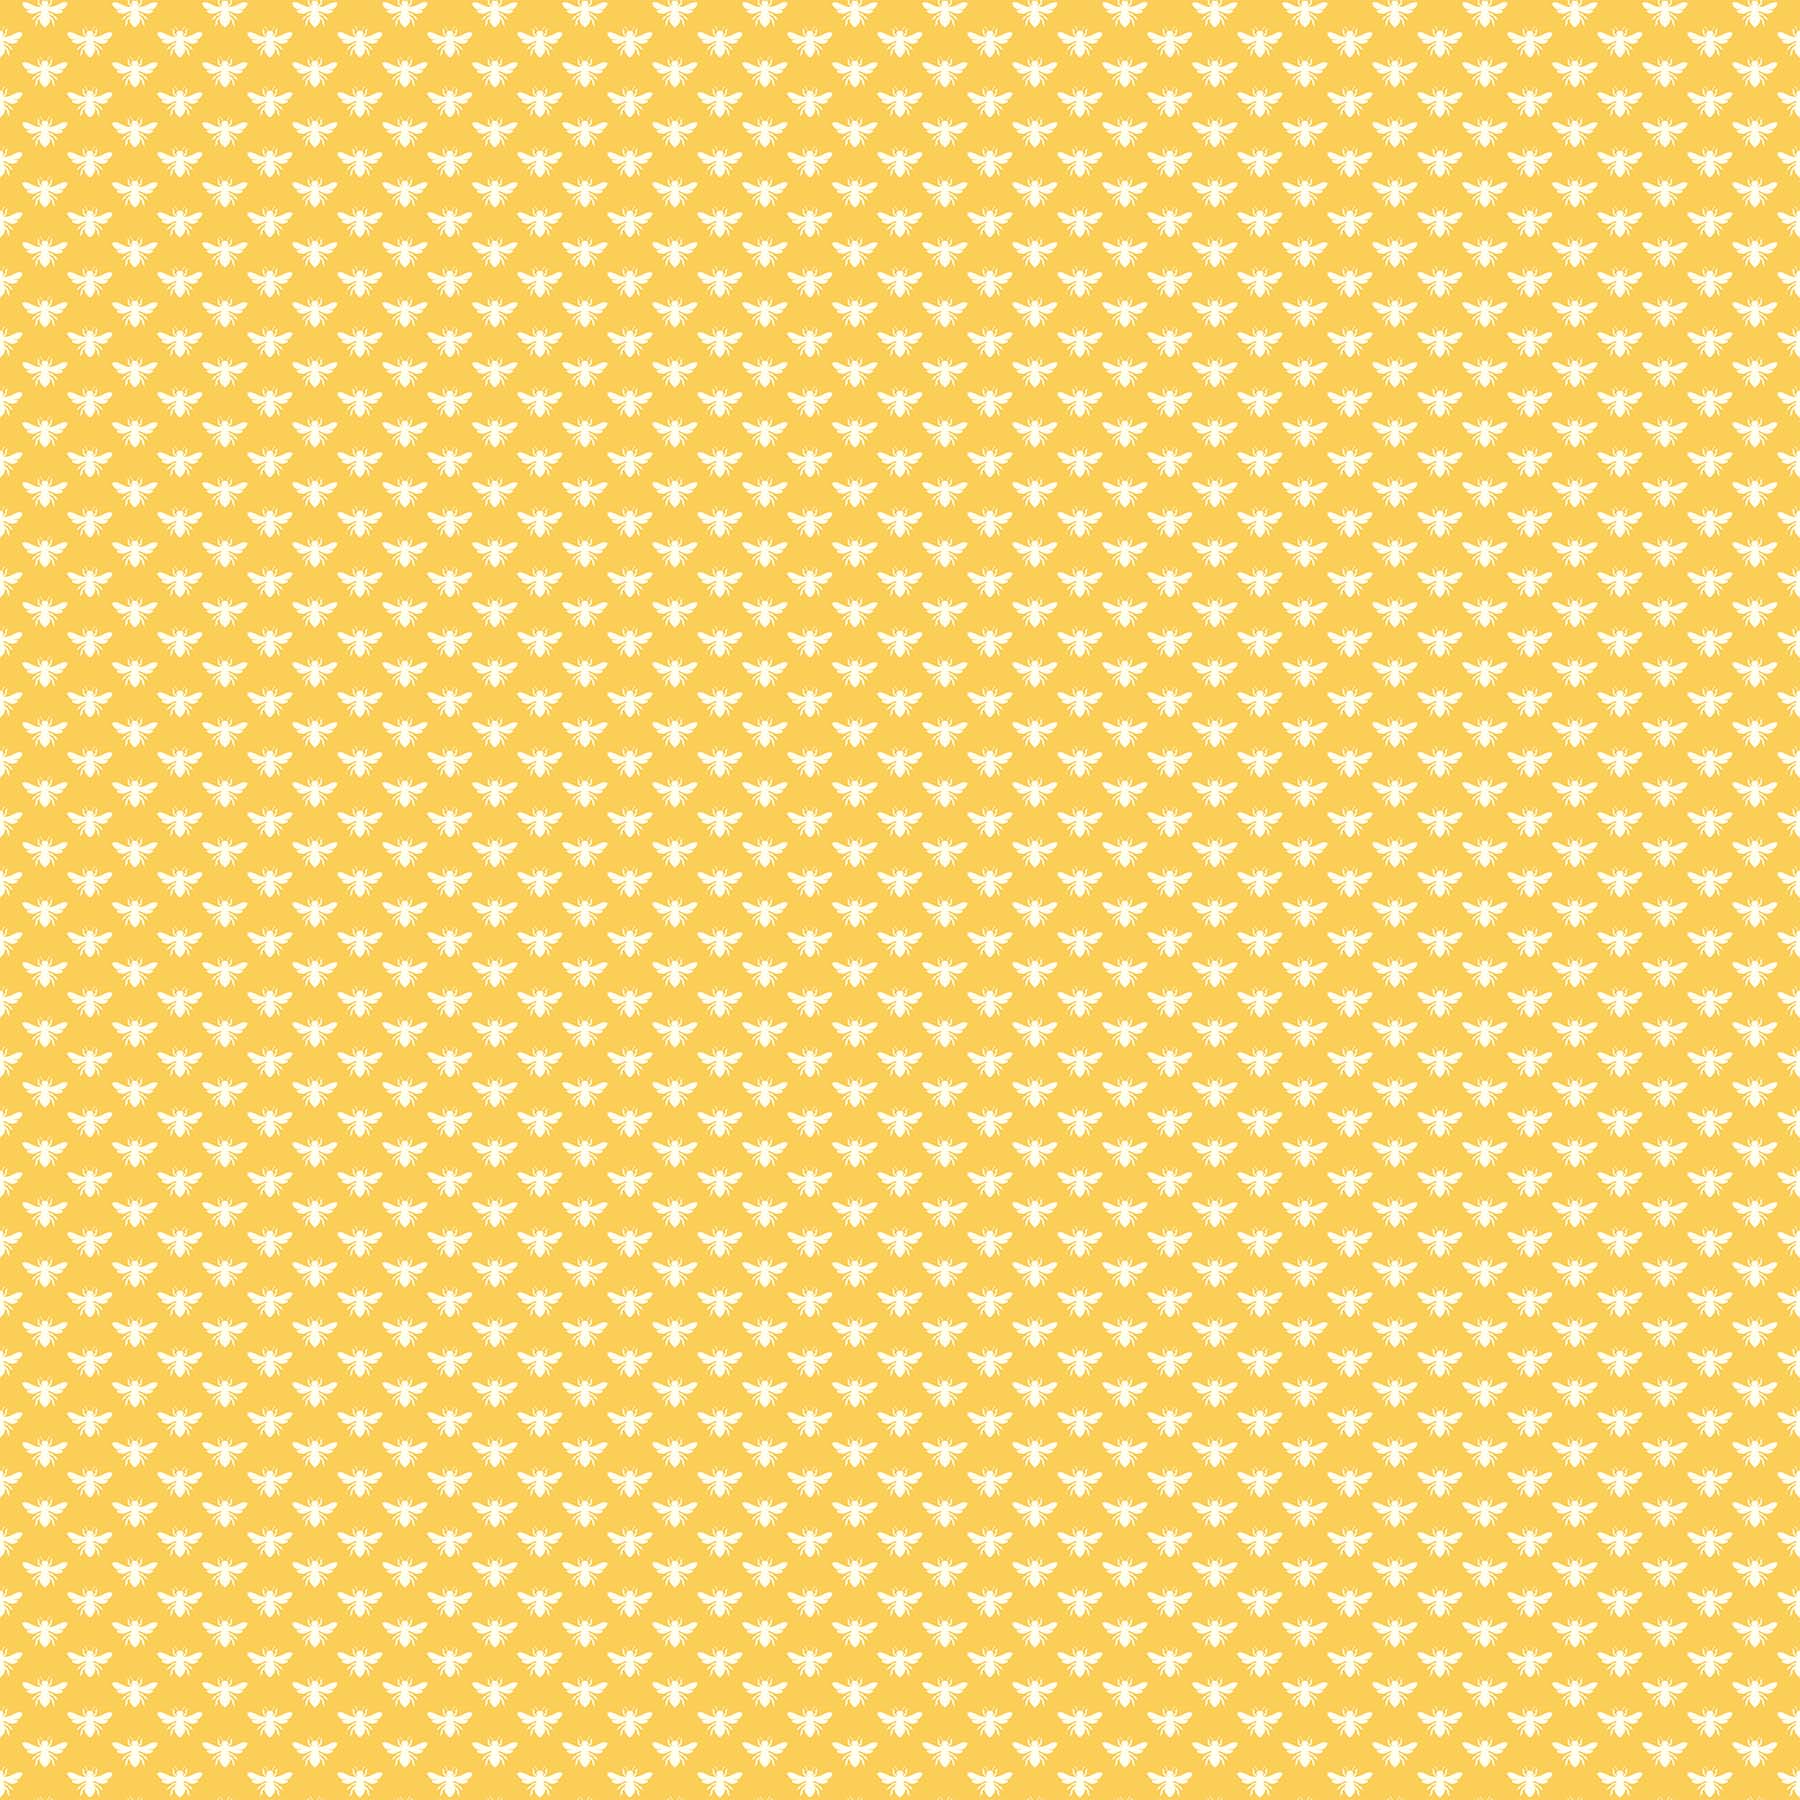 Local Honey Quilt Fabric - Bee Dot in Sunshine Yellow - 90663-50